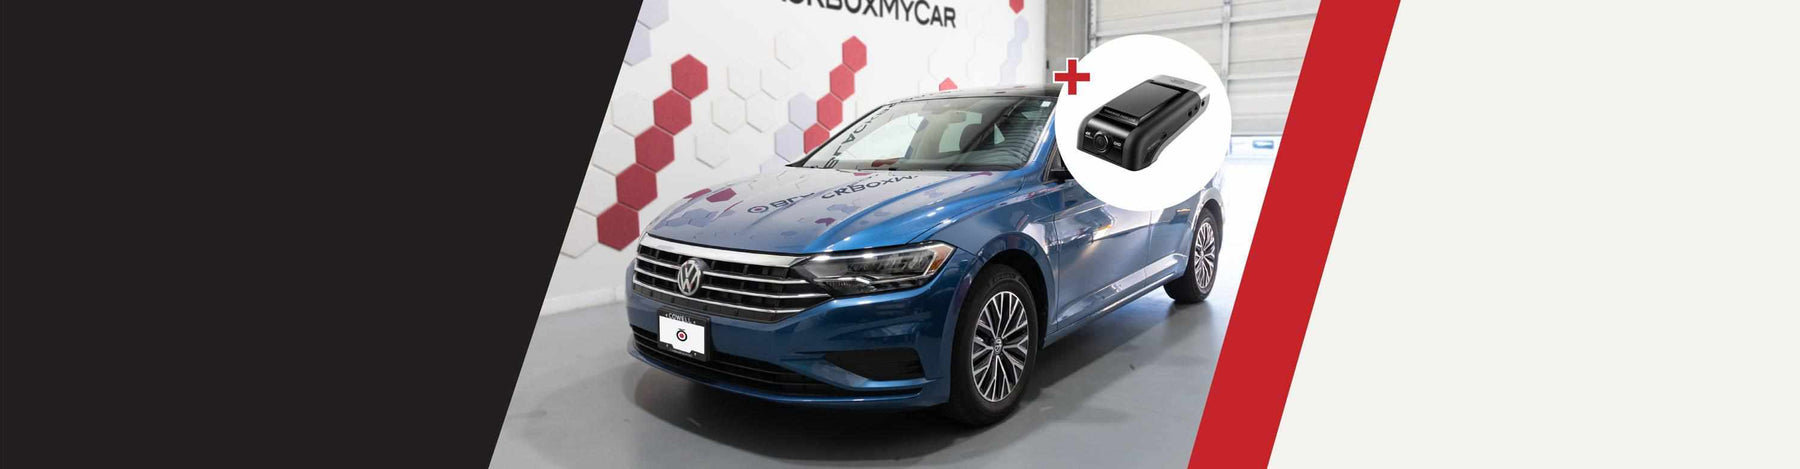 BlackboxMyCar | Dash Cam Installation: 2019 Volkswagen Jetta x Thinkware U1000 Dashcam - - BlackboxMyCar